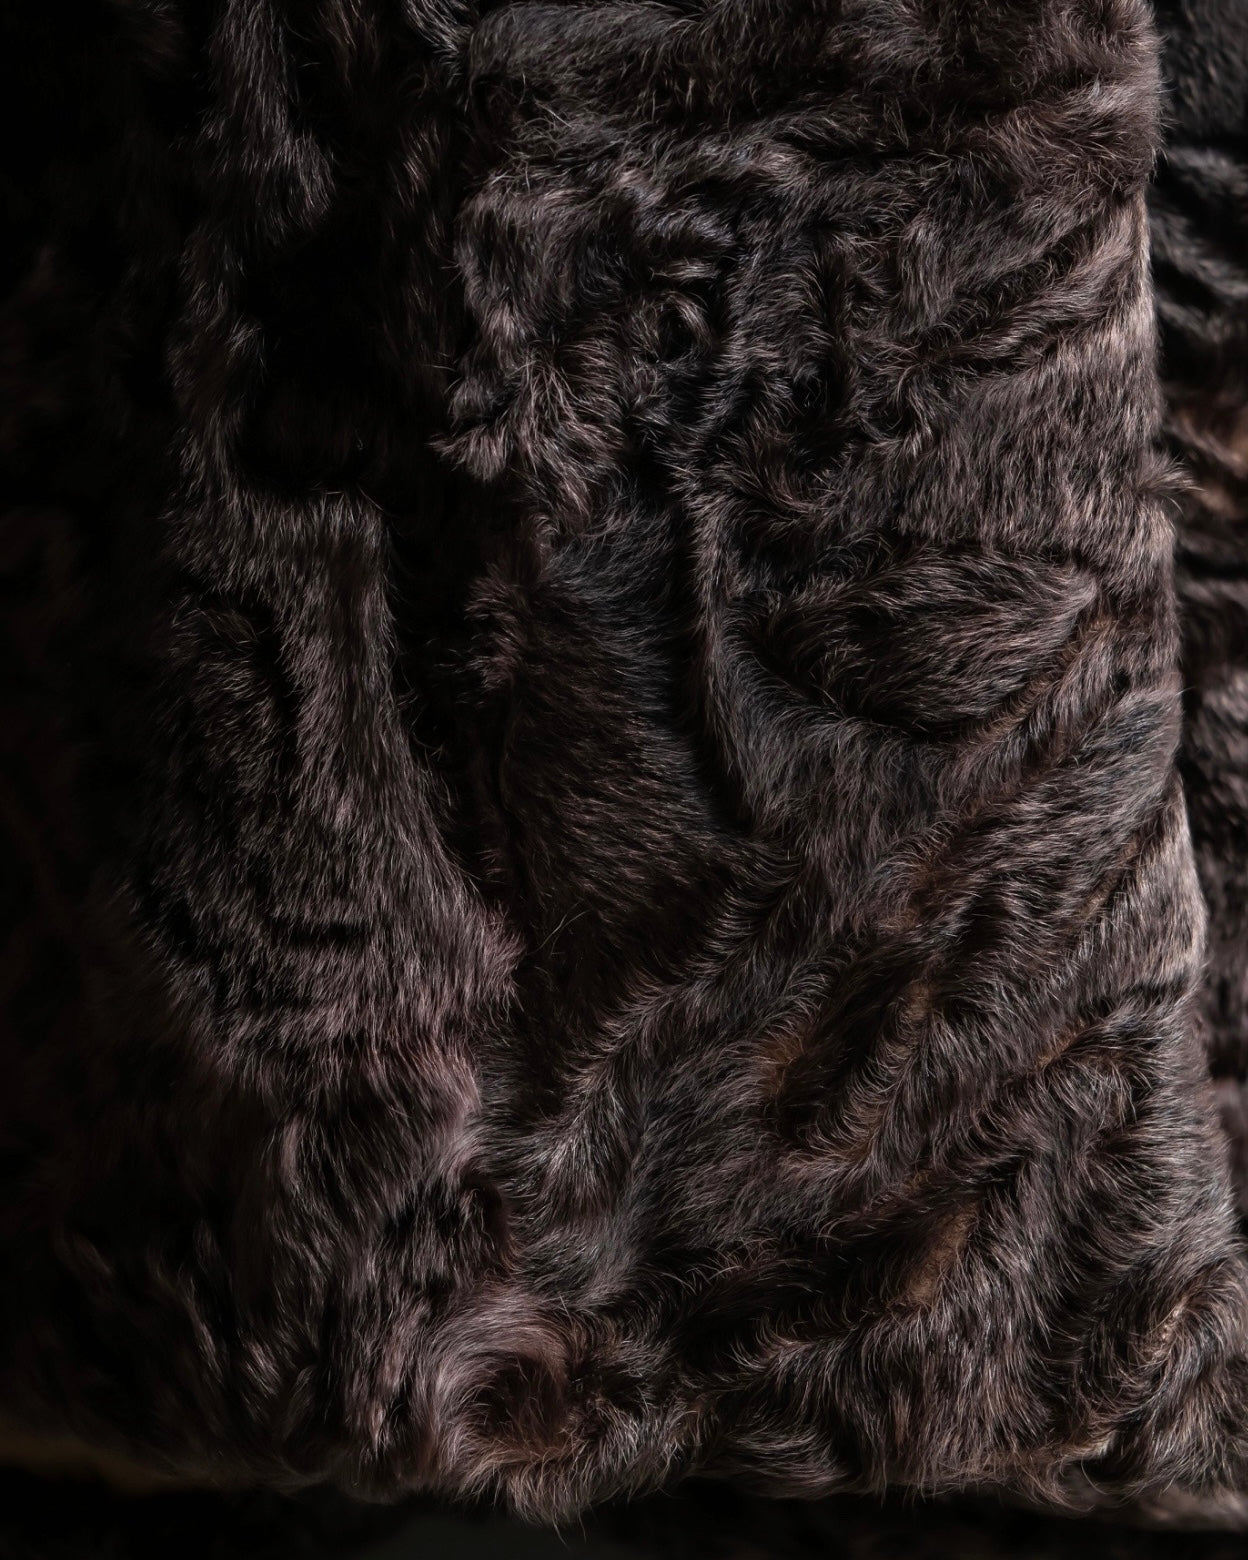 "Guy laroche" vintage real fur leather coat